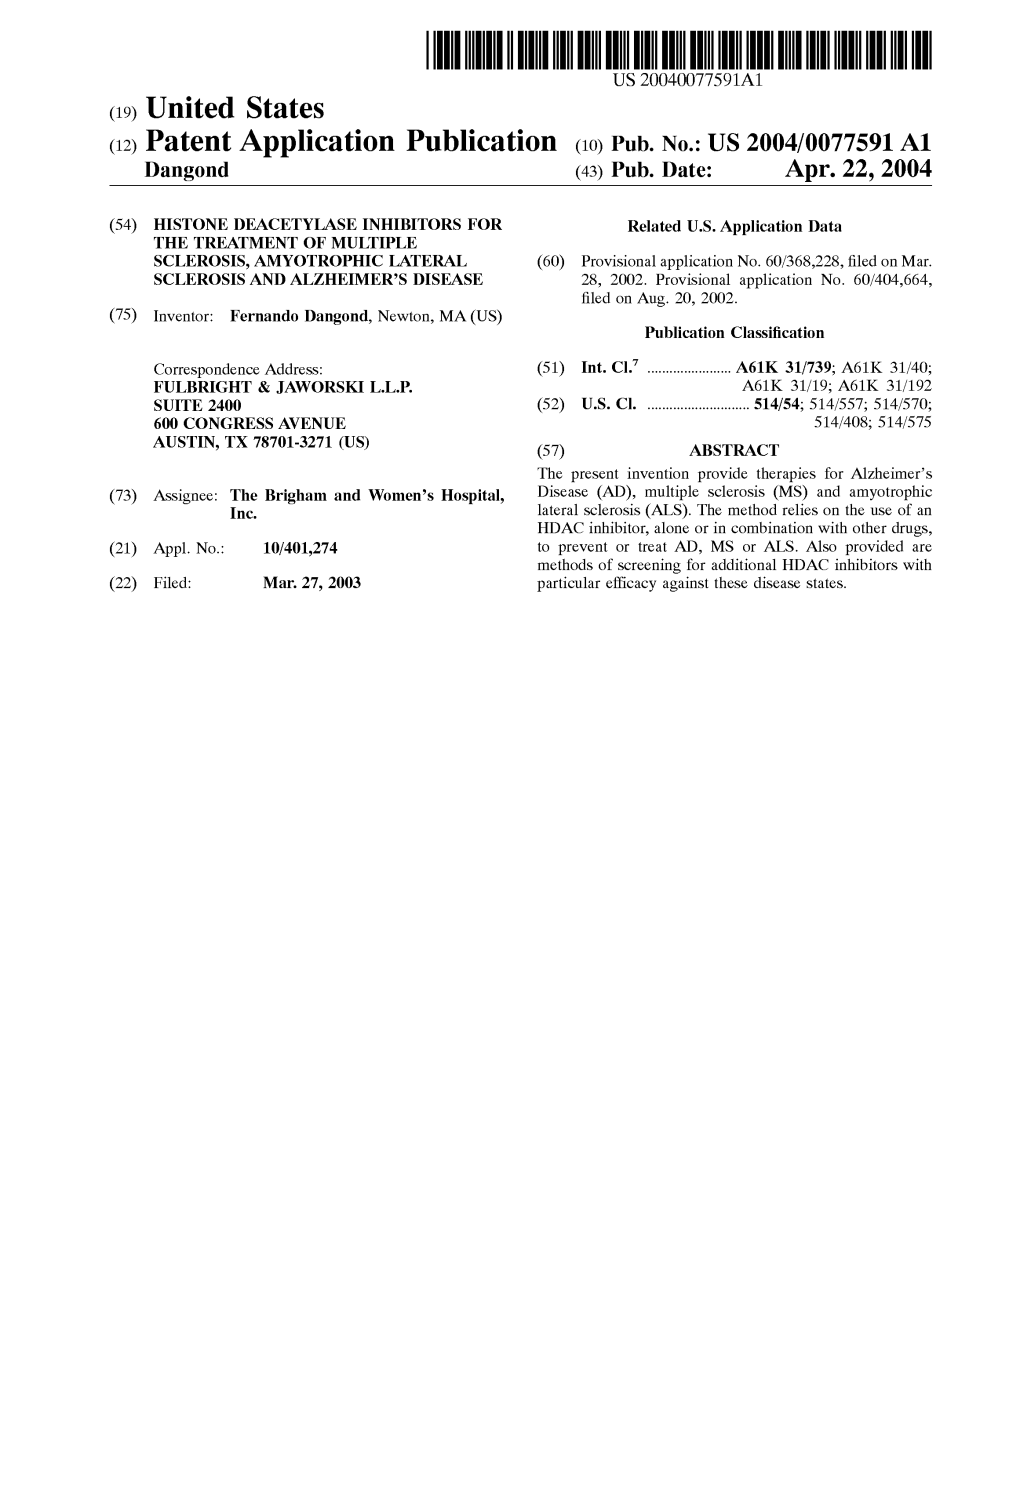 (12) Patent Application Publication (10) Pub. No.: US 2004/0077591 A1 Dangond (43) Pub